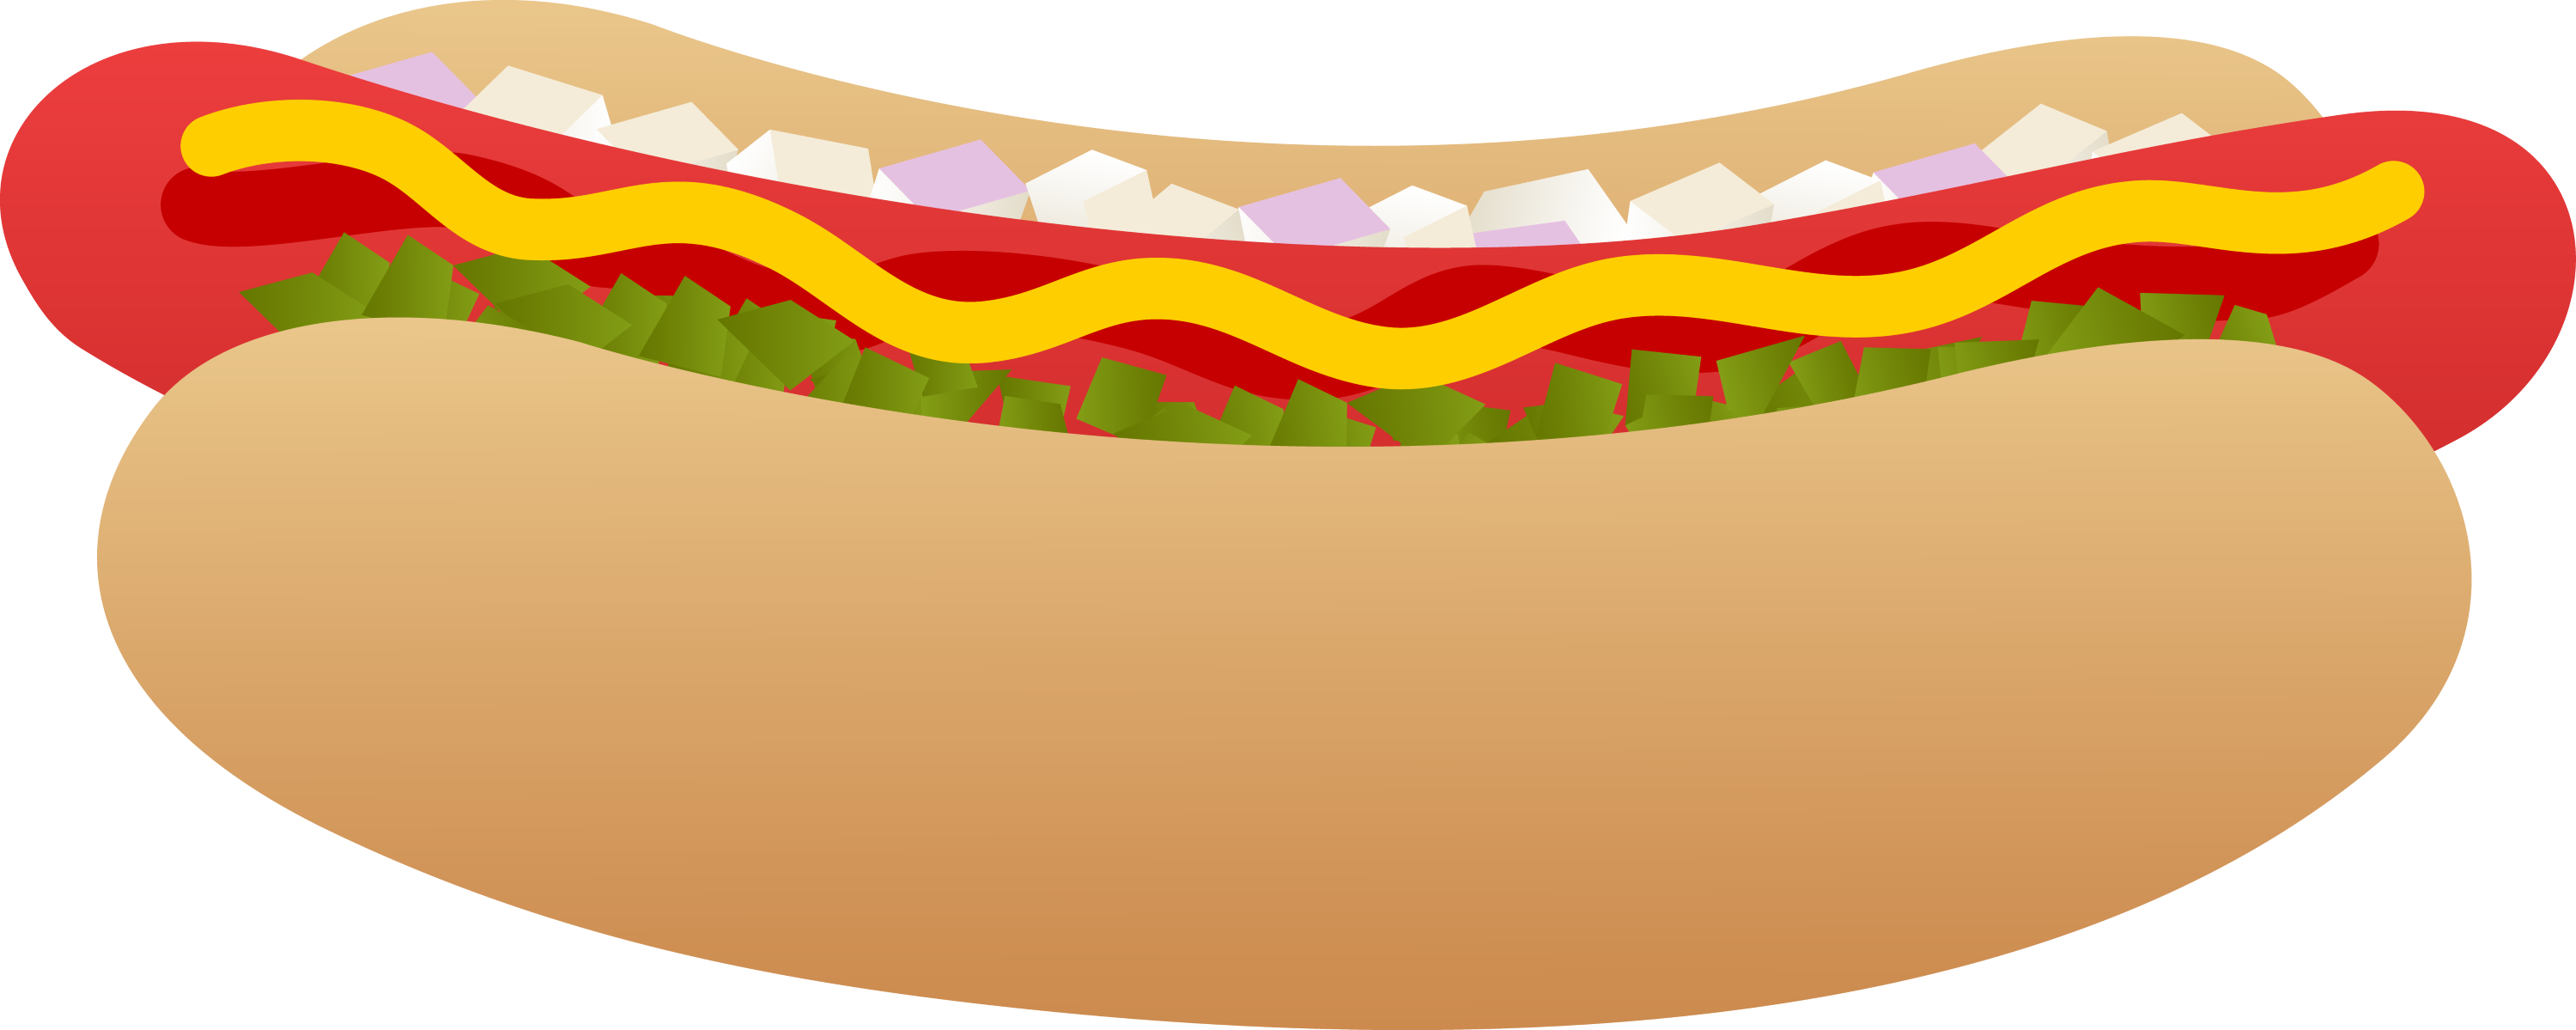 free clipart hot dog - photo #3